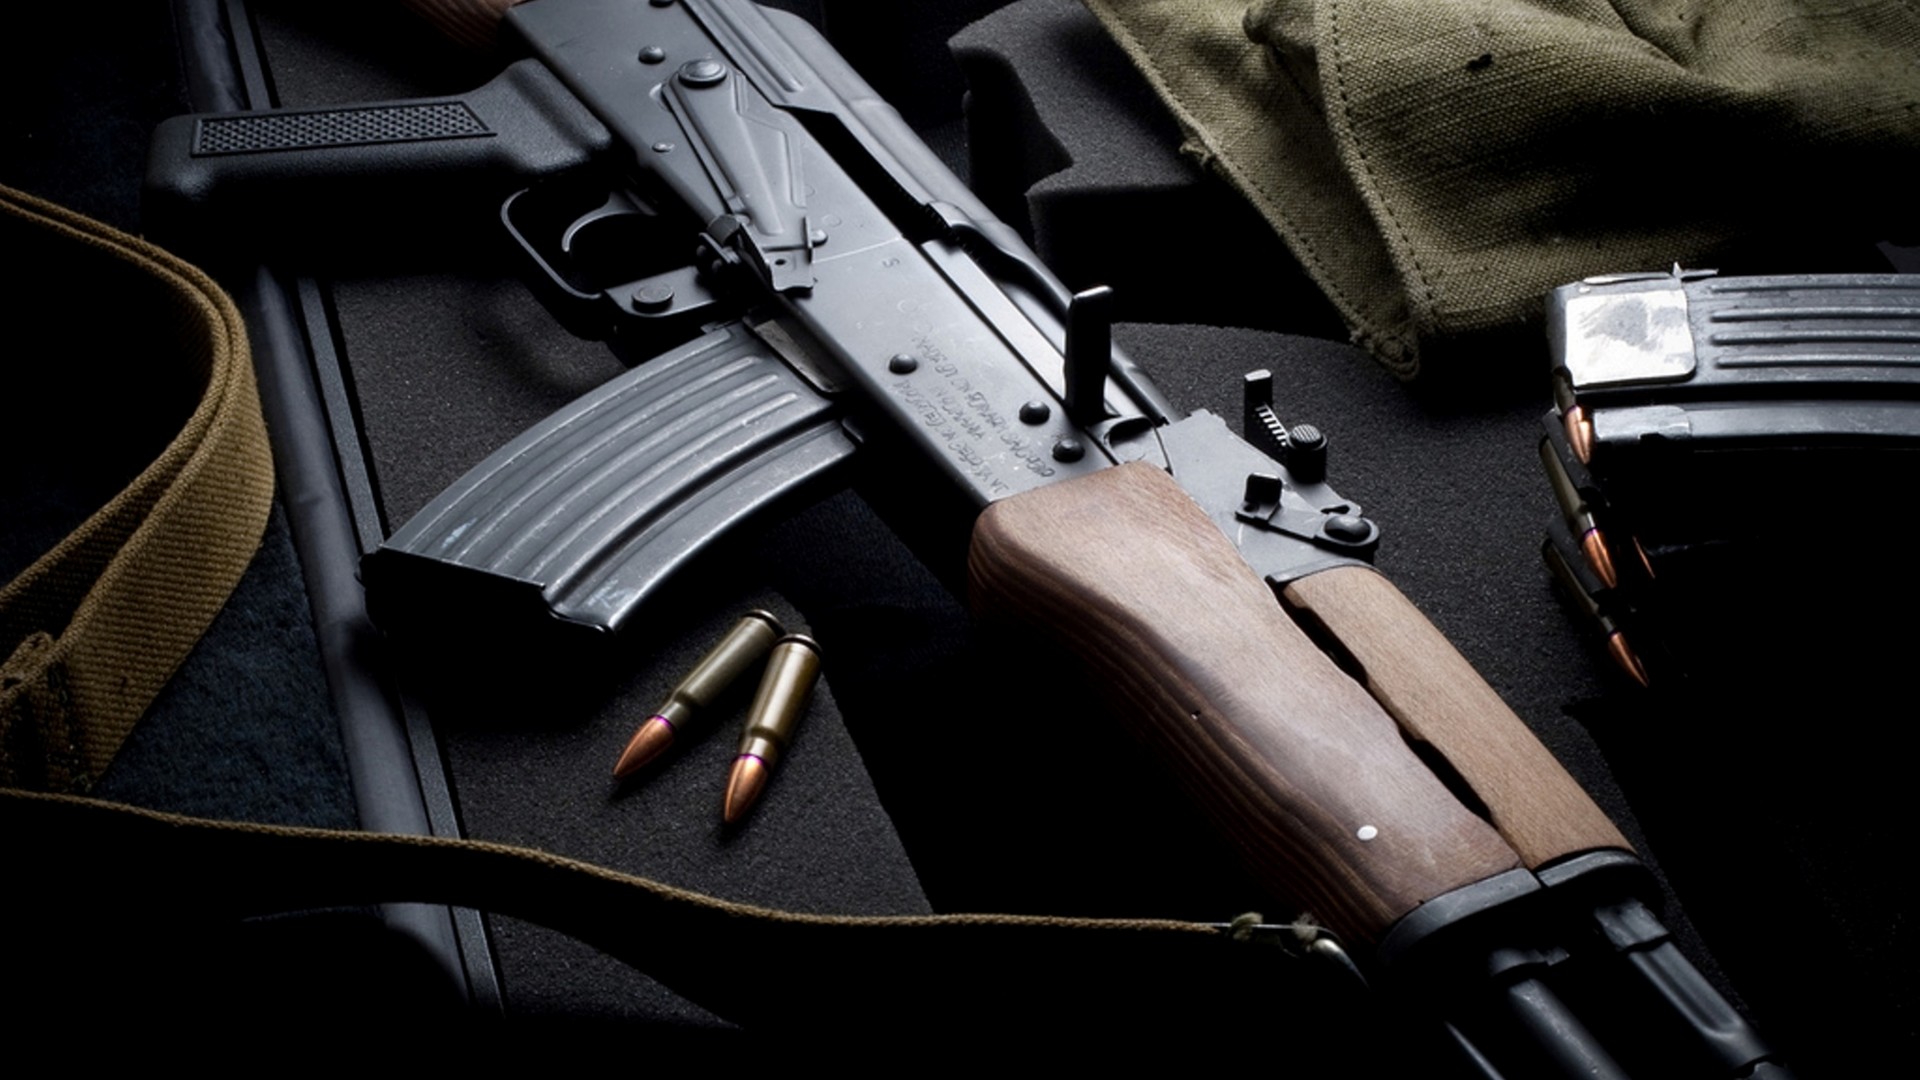 АК-74, Калашников, автомат, Россия, боеприпасы, AK-74, Kalashnikov, AK-47, assault rifle, Russia, USSR, modern, bullets (horizontal)